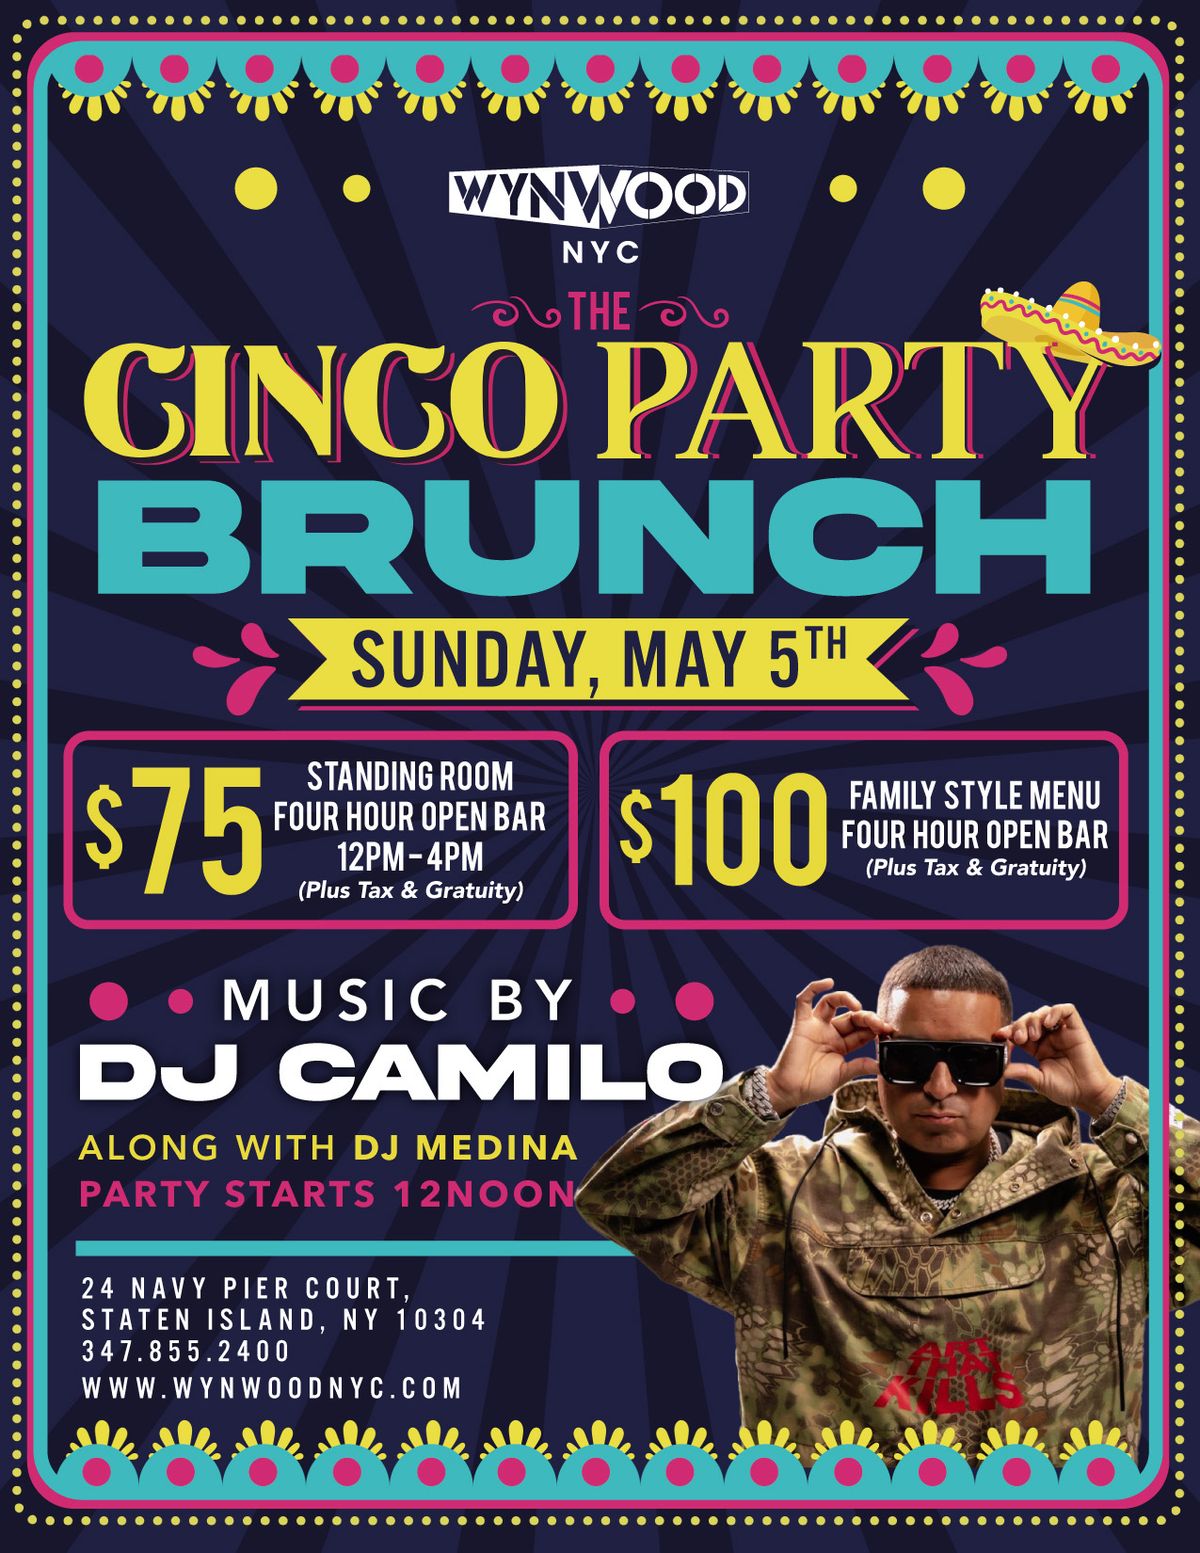 The Cinco Party Brunch - DJ Camilo - Sunday, May 5th - Wynwood